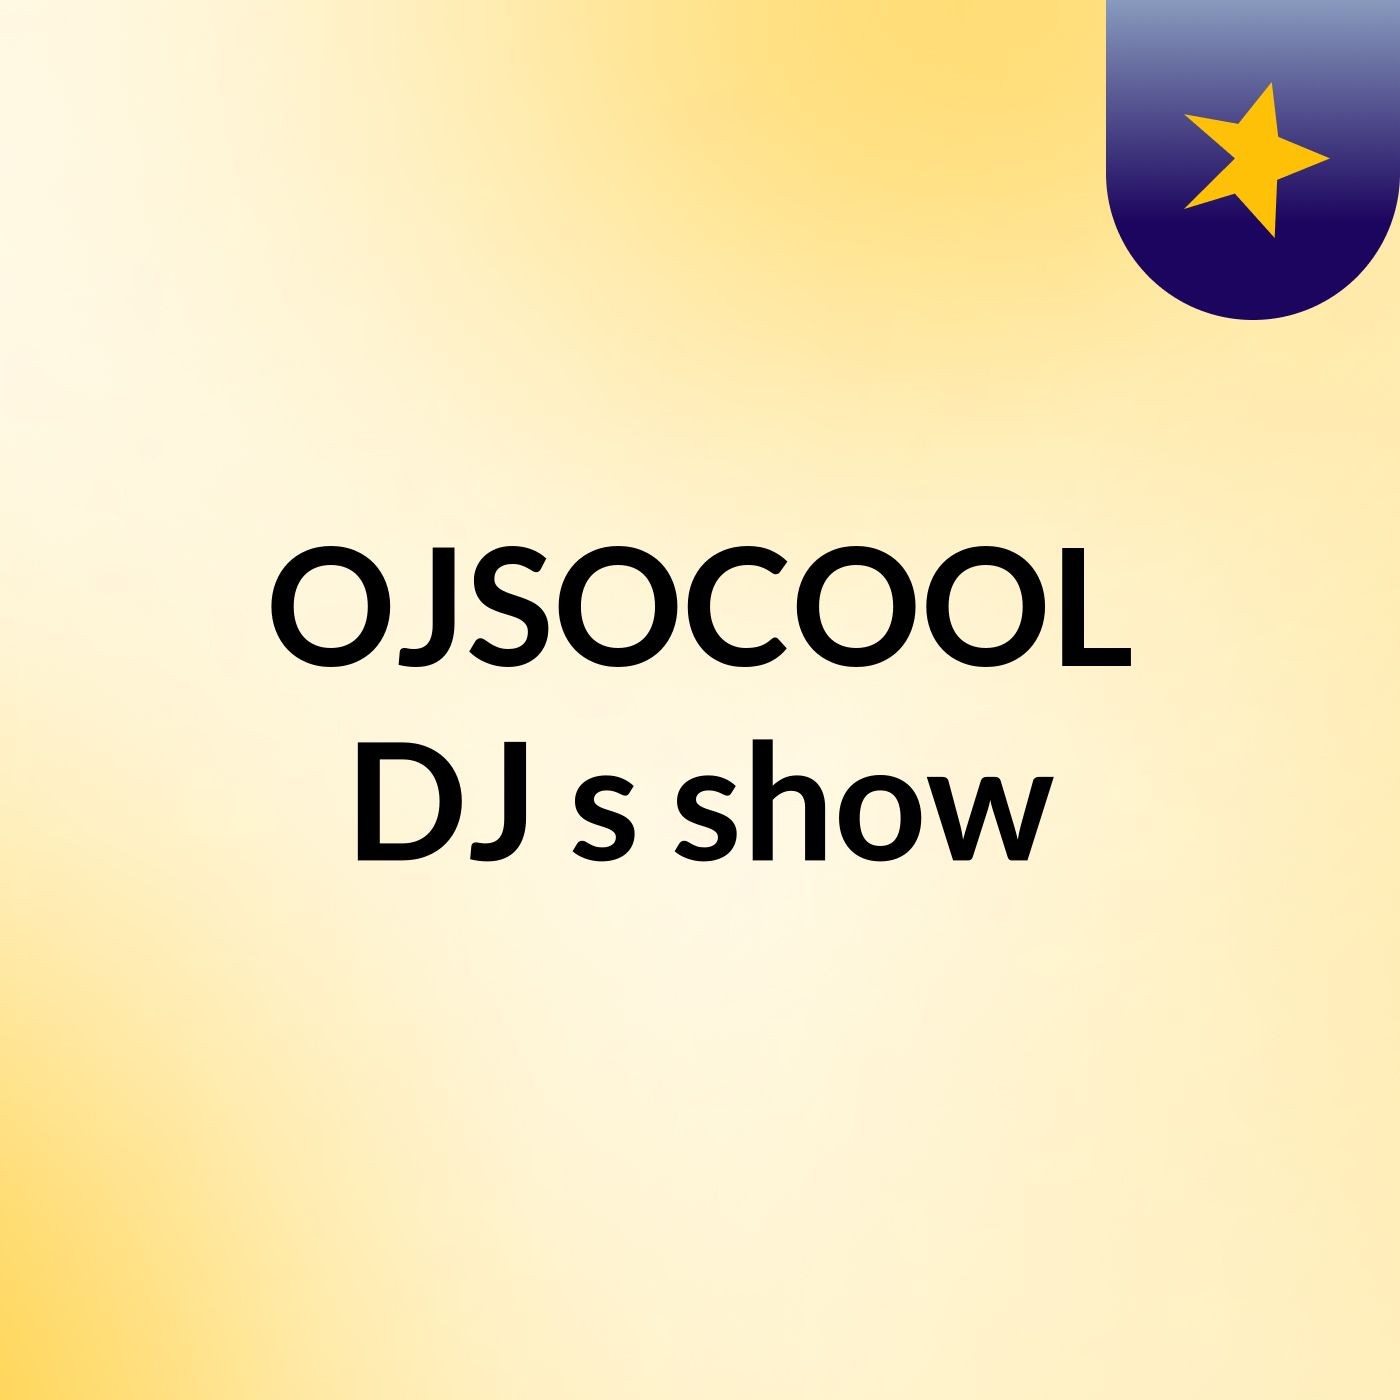 OJSOCOOL DJ's show